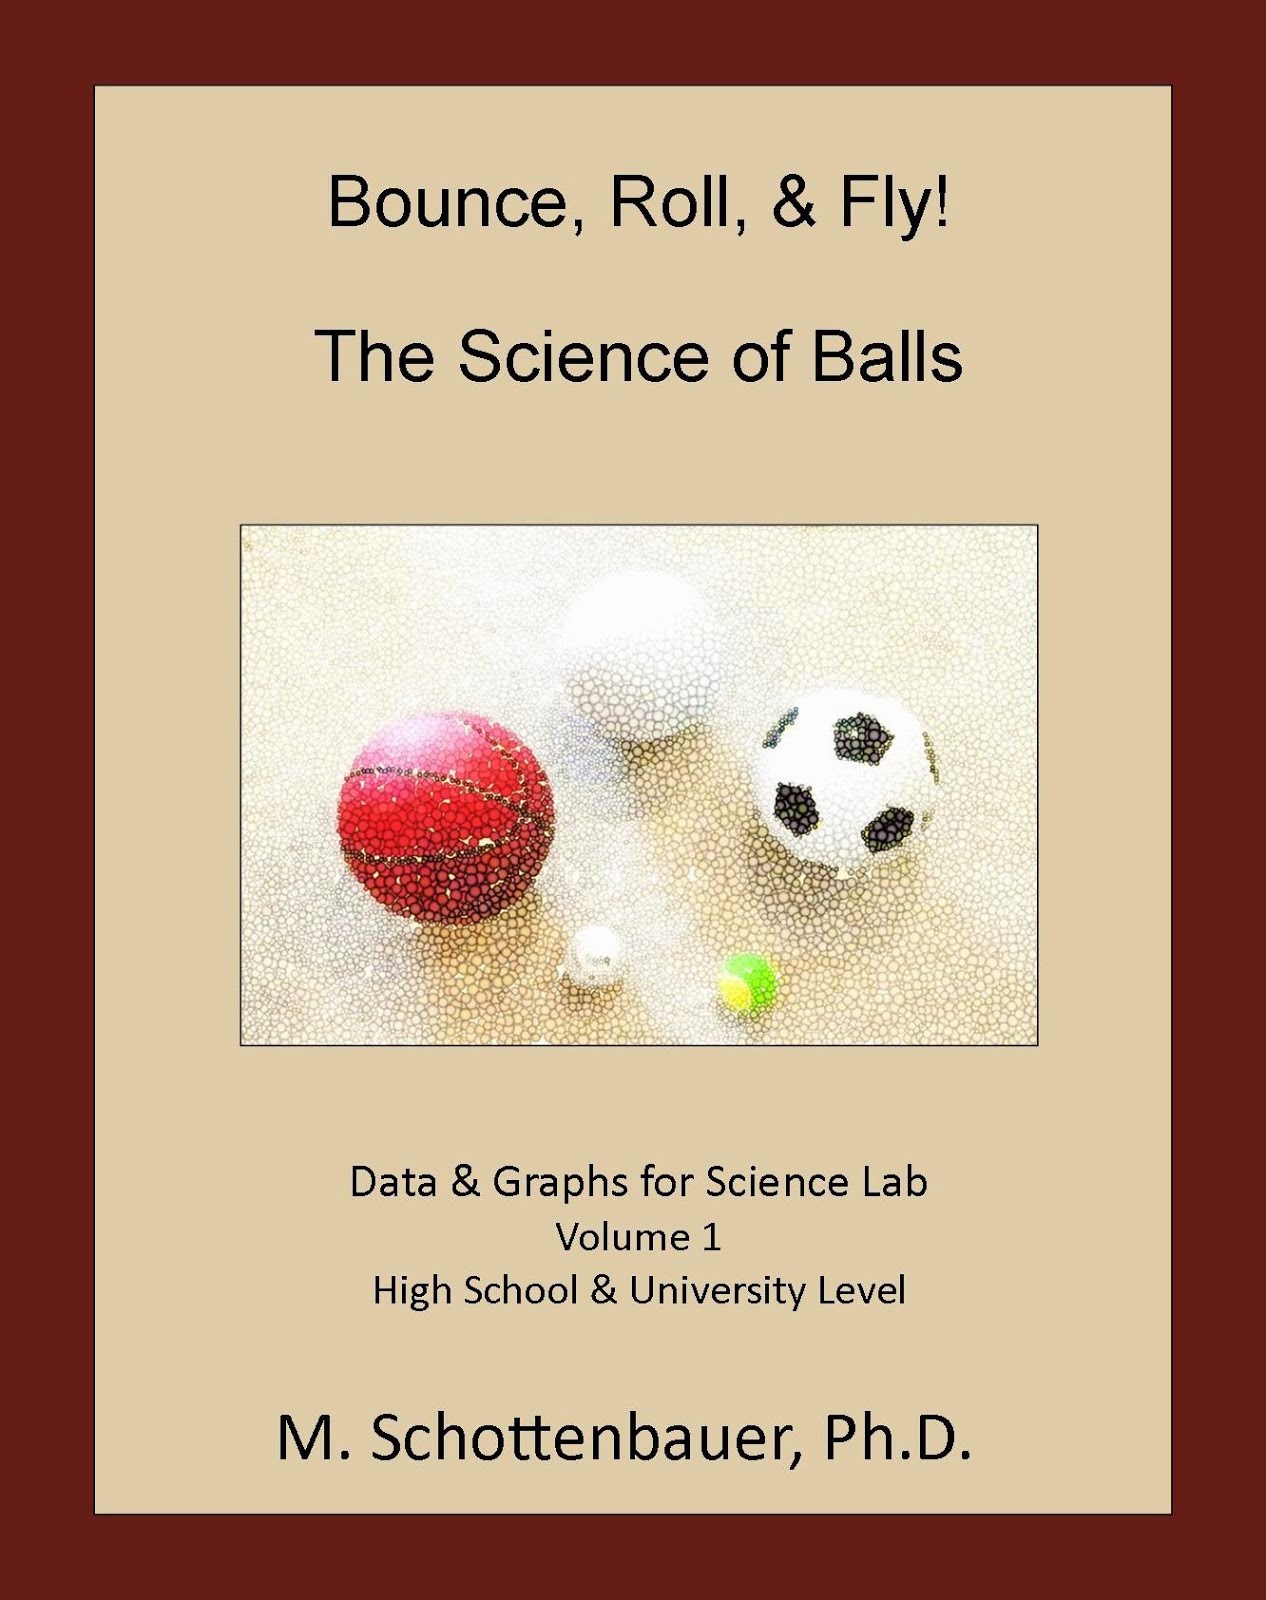 Science of Balls